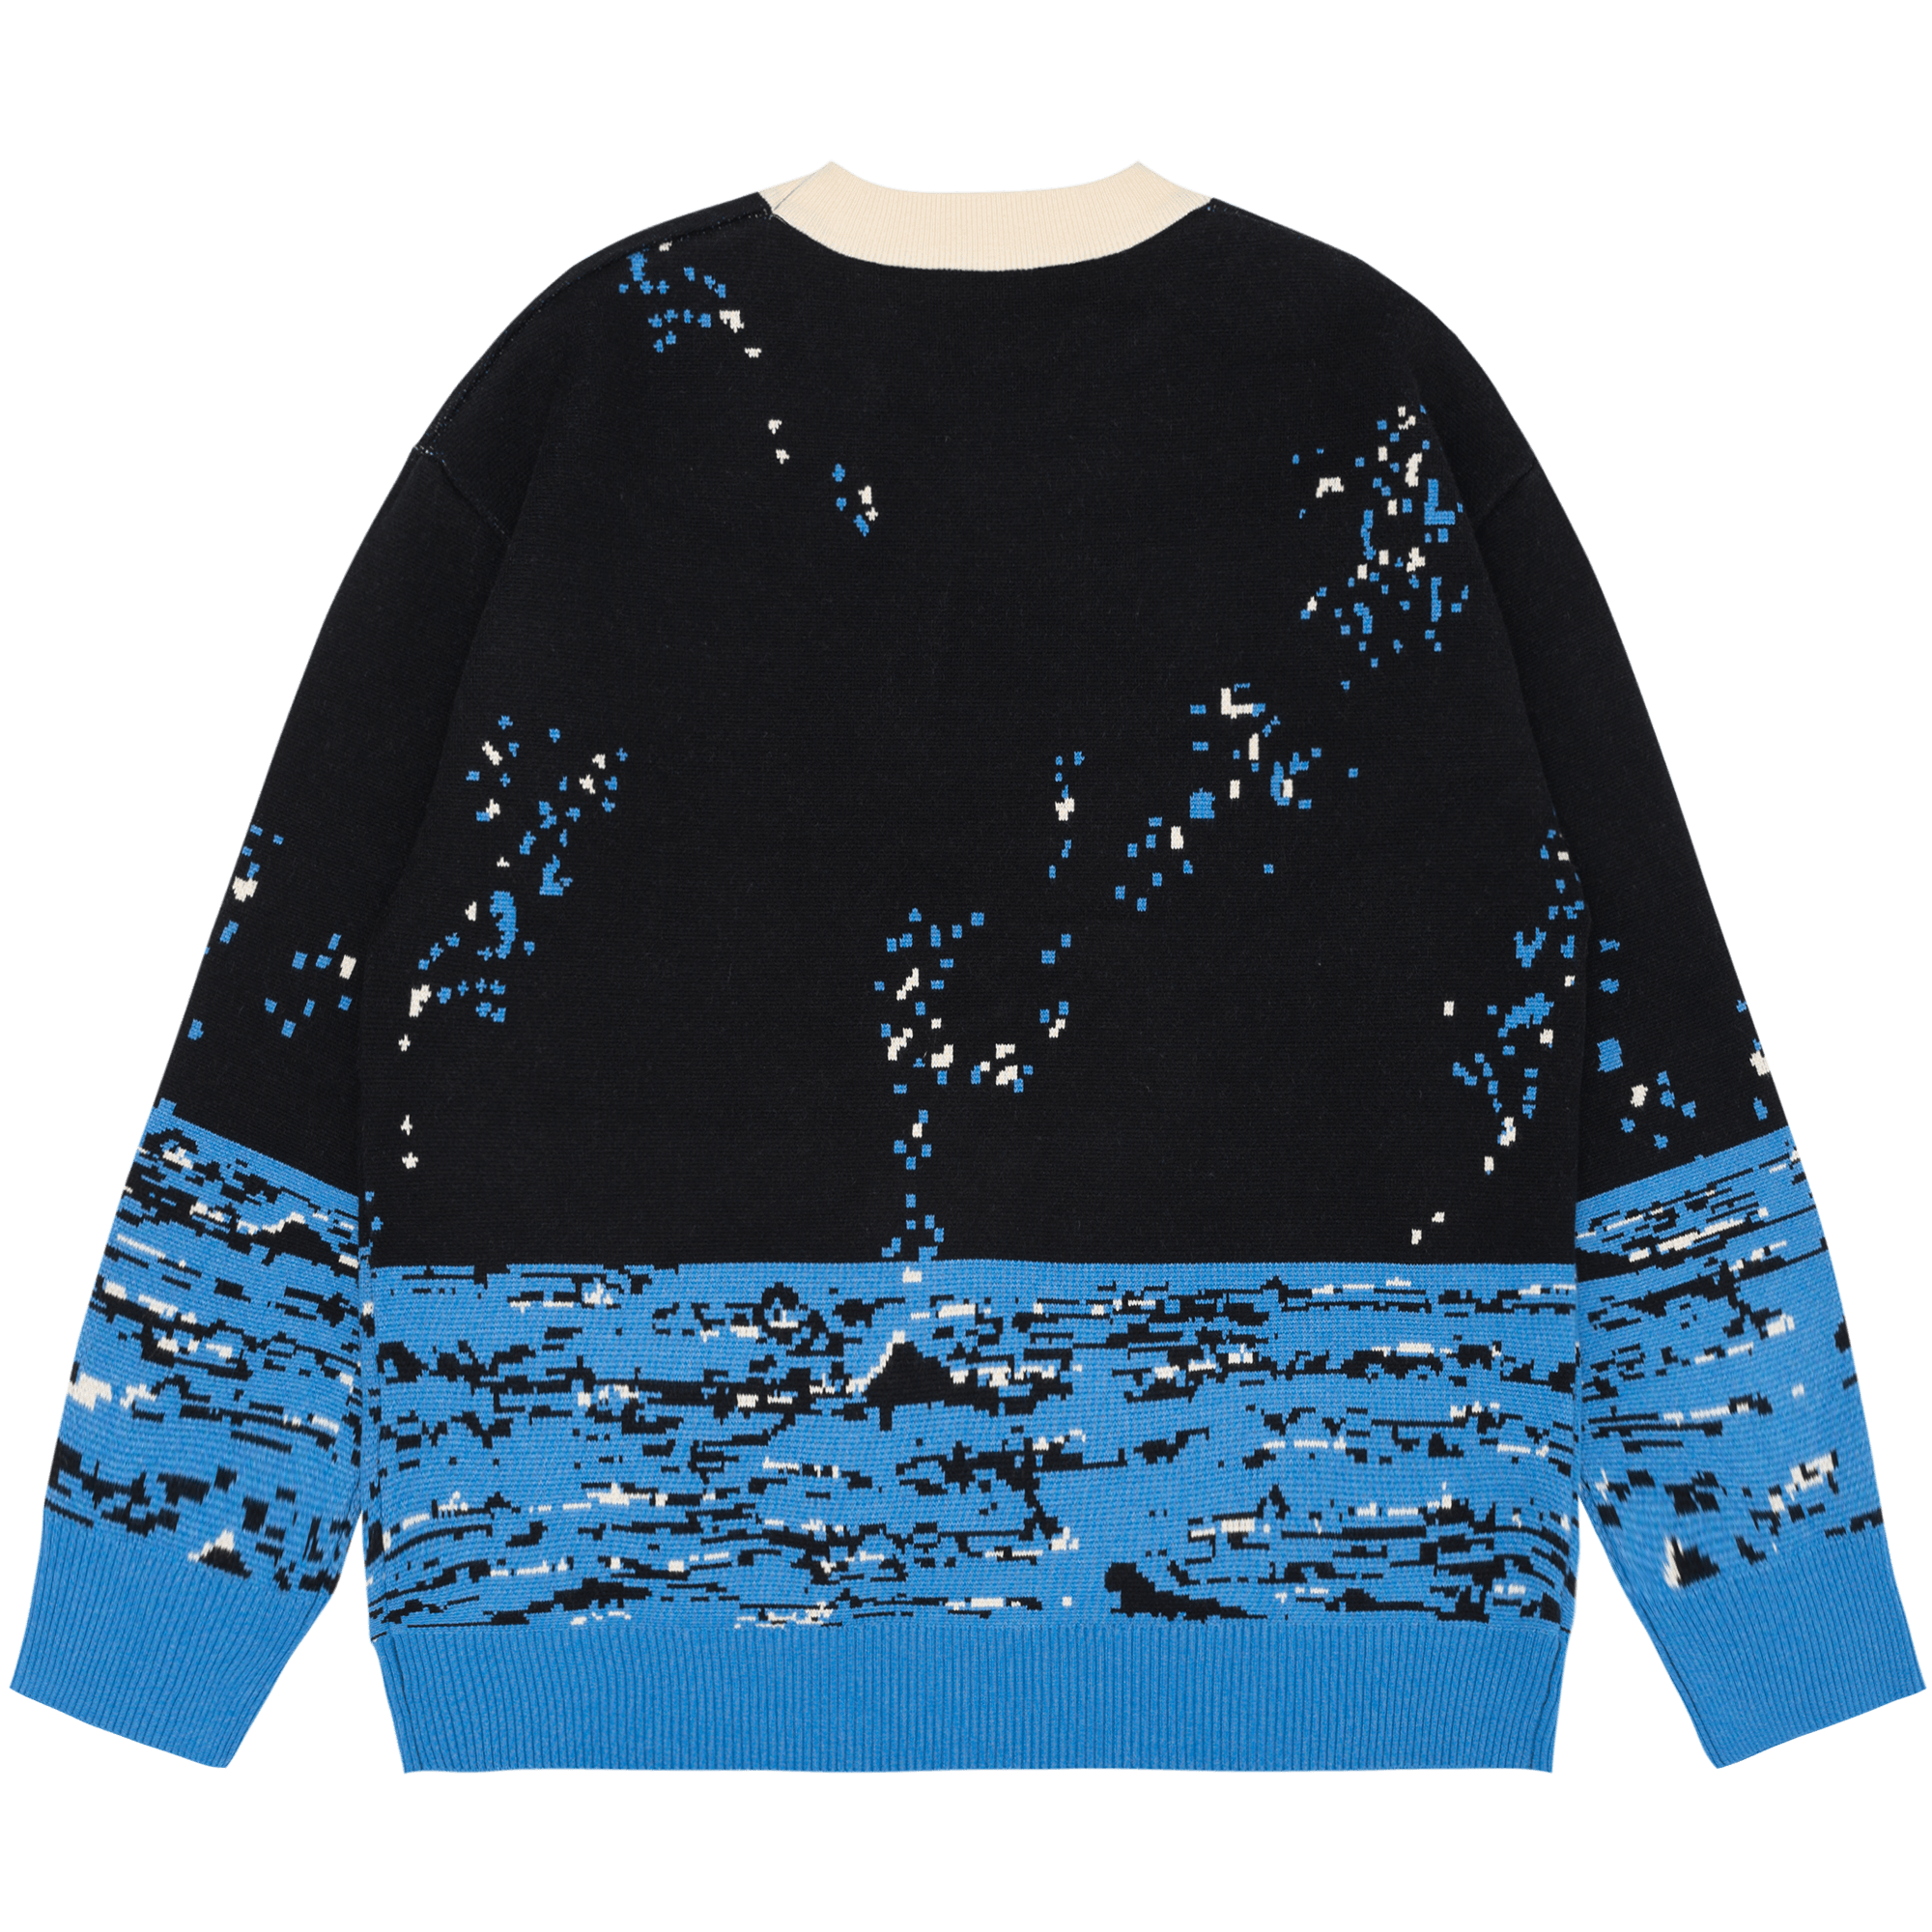 TAKA ORIGINAL LIMITED - TAKA Original Life Is Beautiful Daisy ocean of tears knit jumper